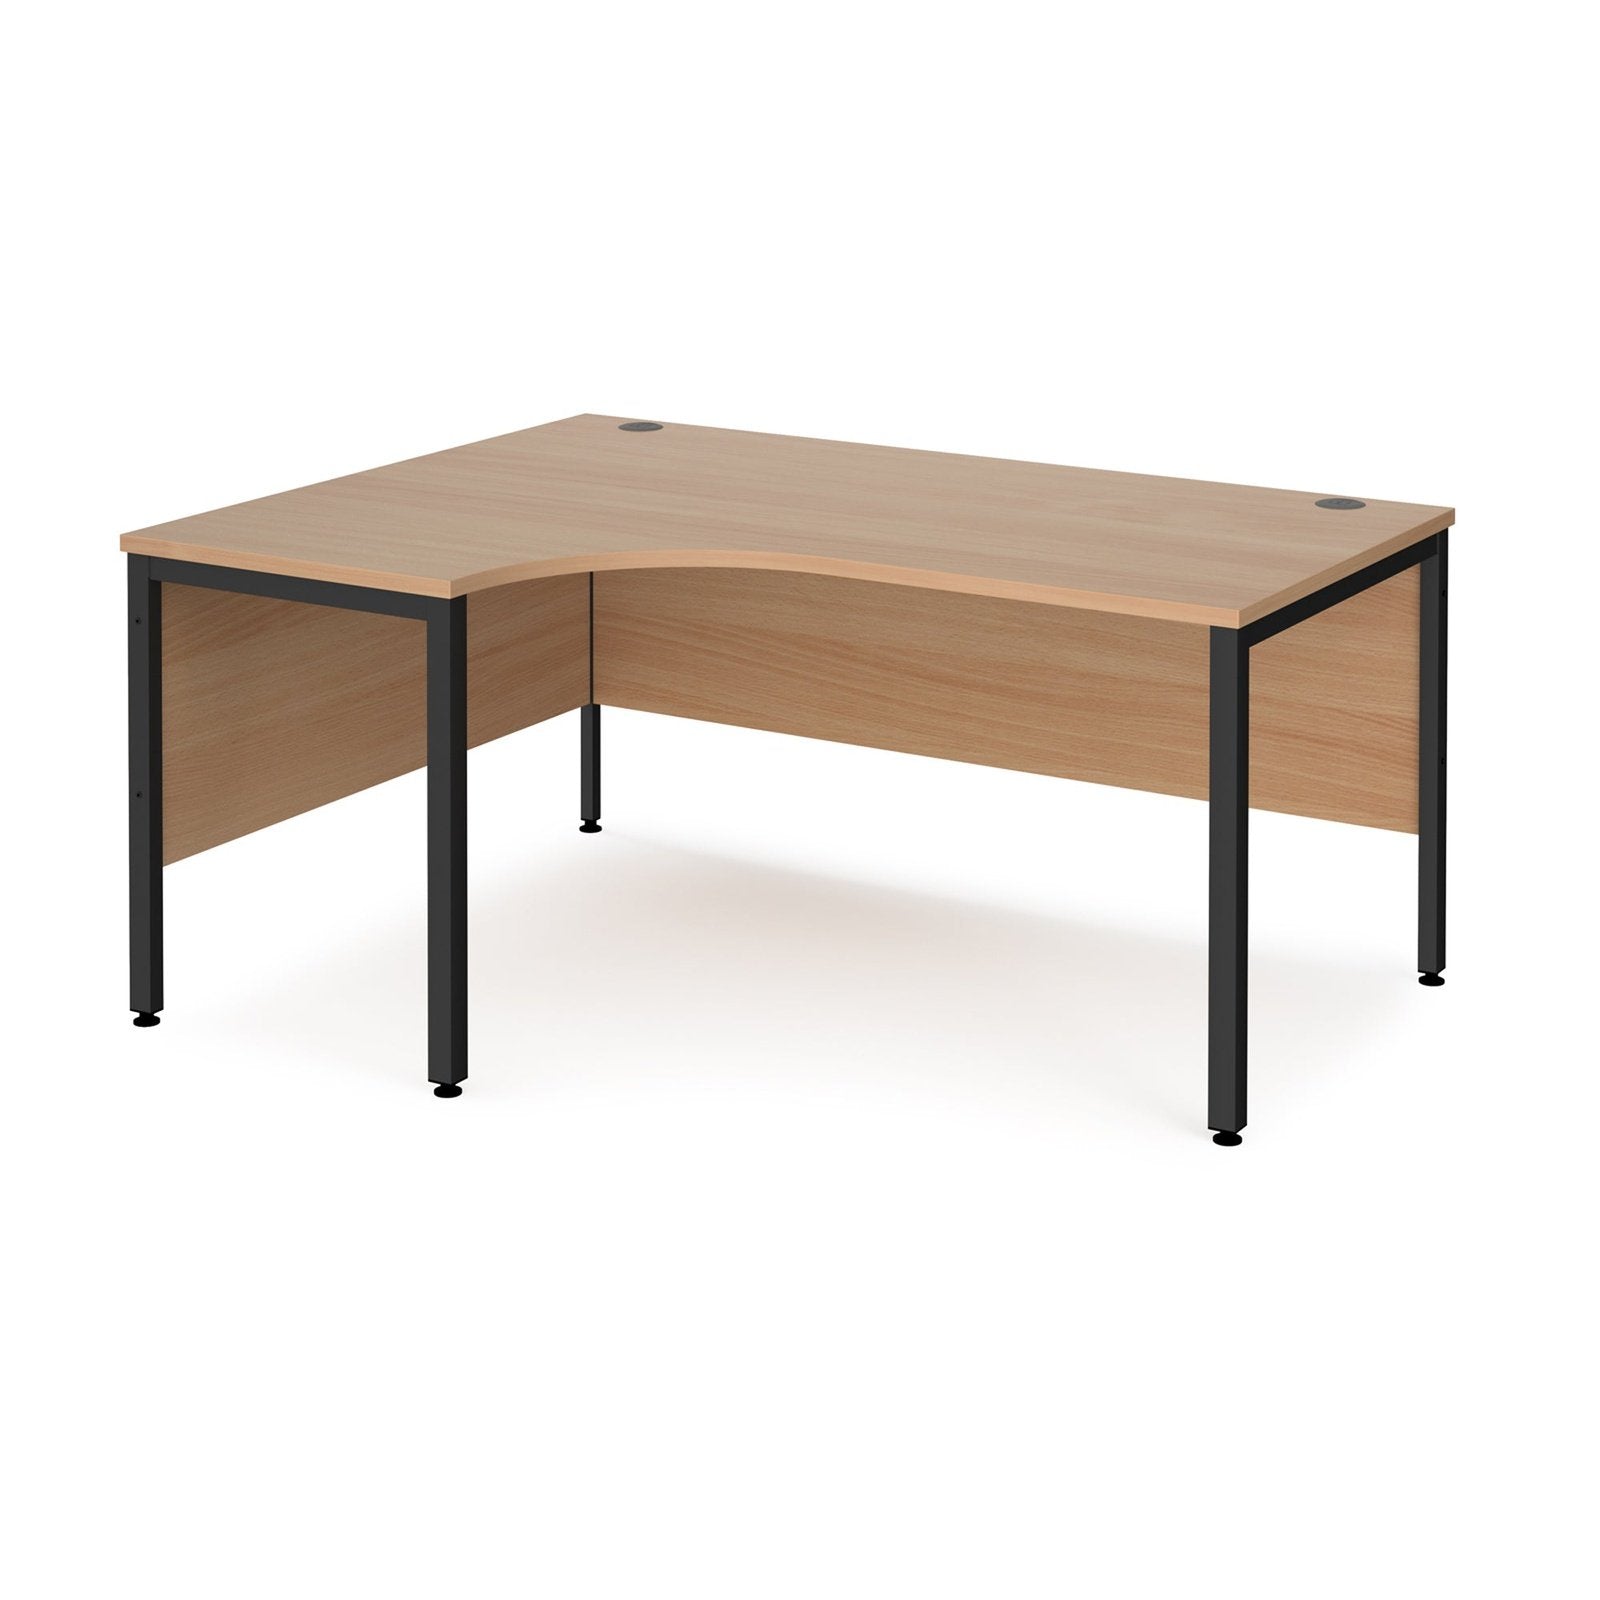 Maestro 25 bench leg left hand ergonomic desk - Office Products Online